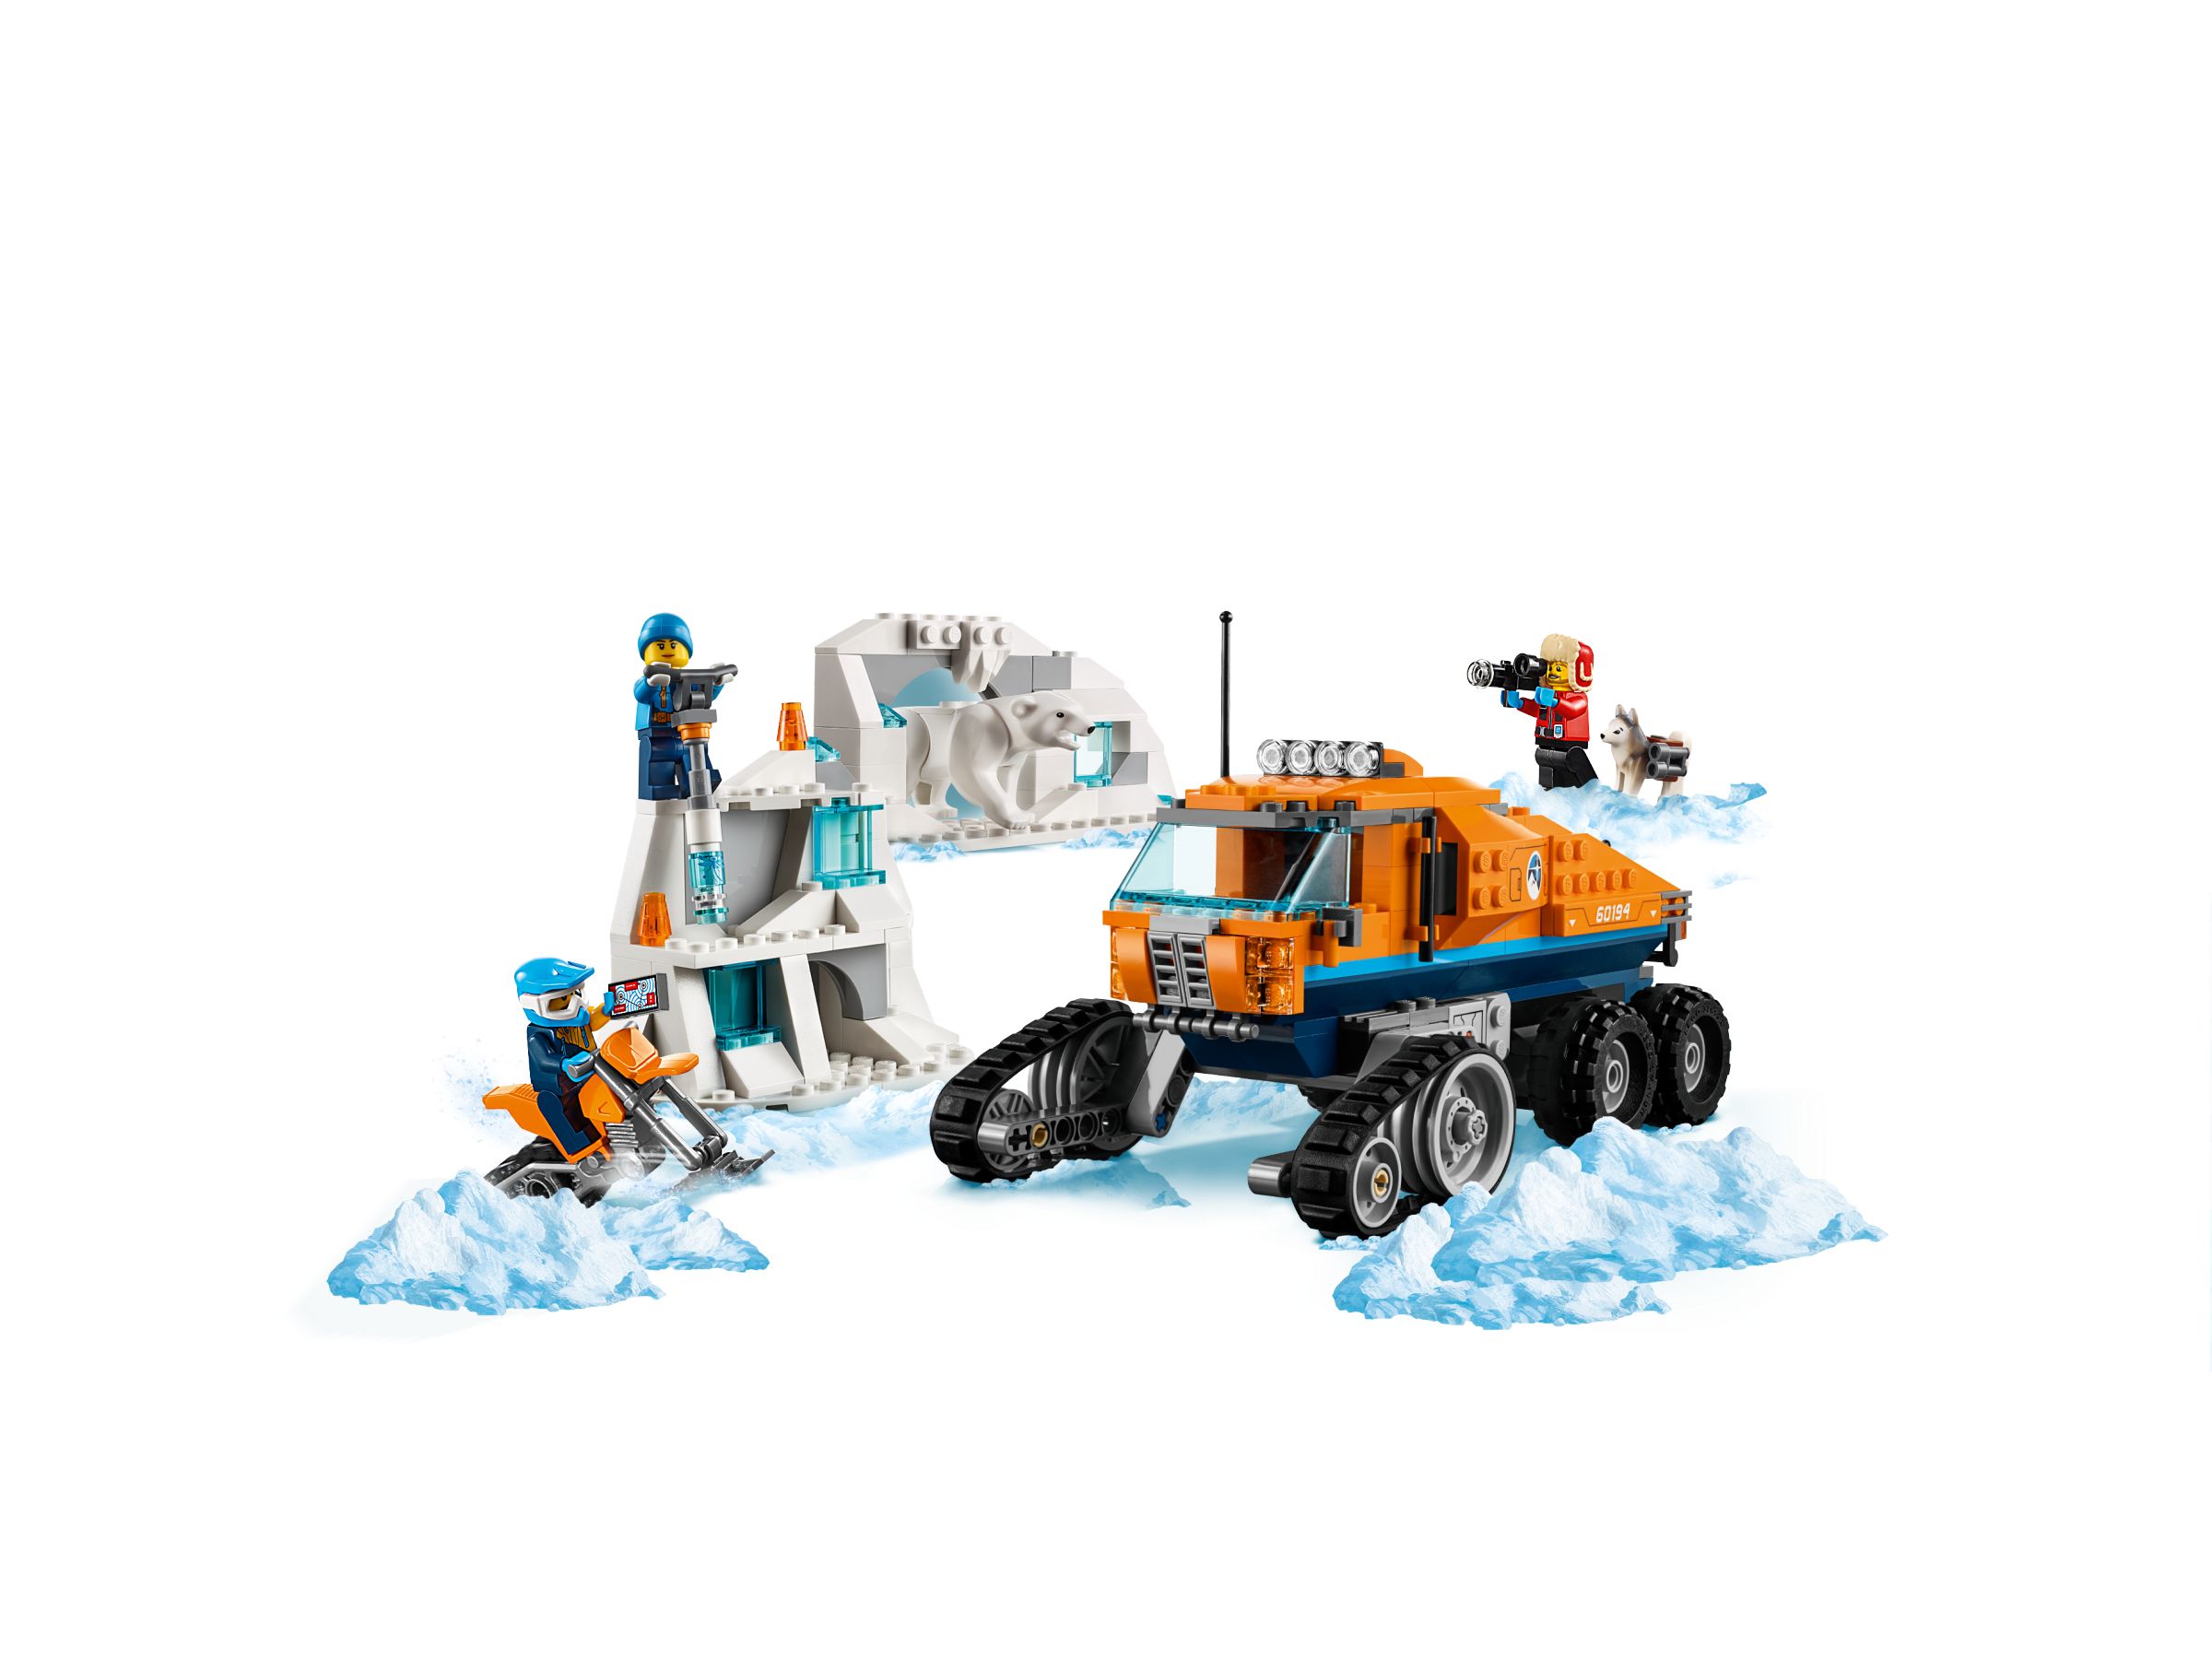 LEGO City 60194 Arktis-Erkundungstruck LEGO_60194_alt2.jpg